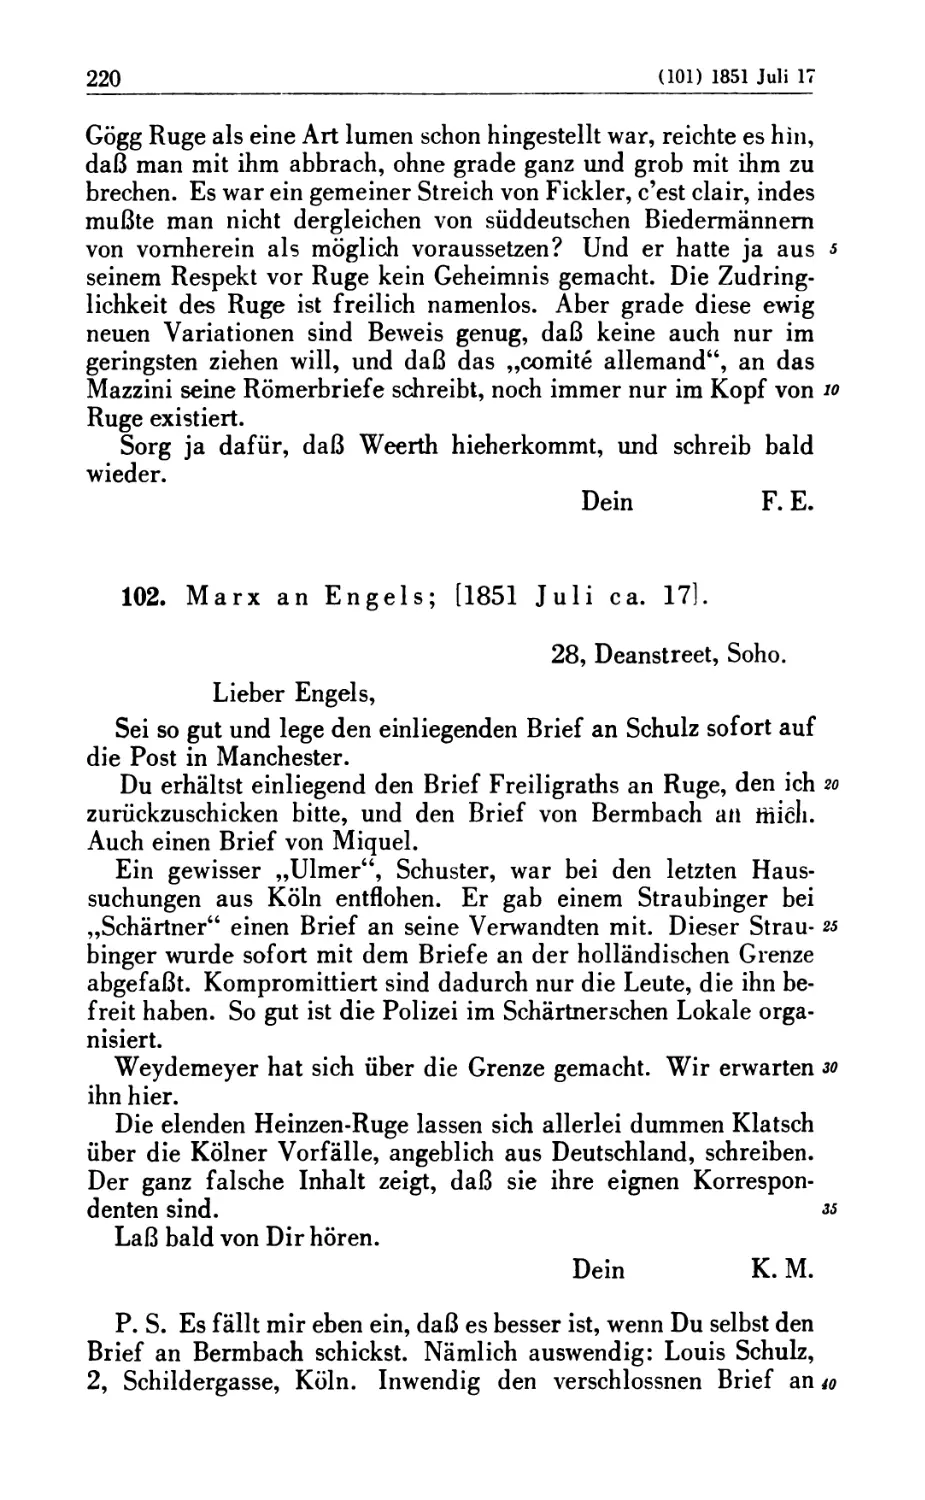 102. Marx an Engels; [1851 Juli ca. 17]